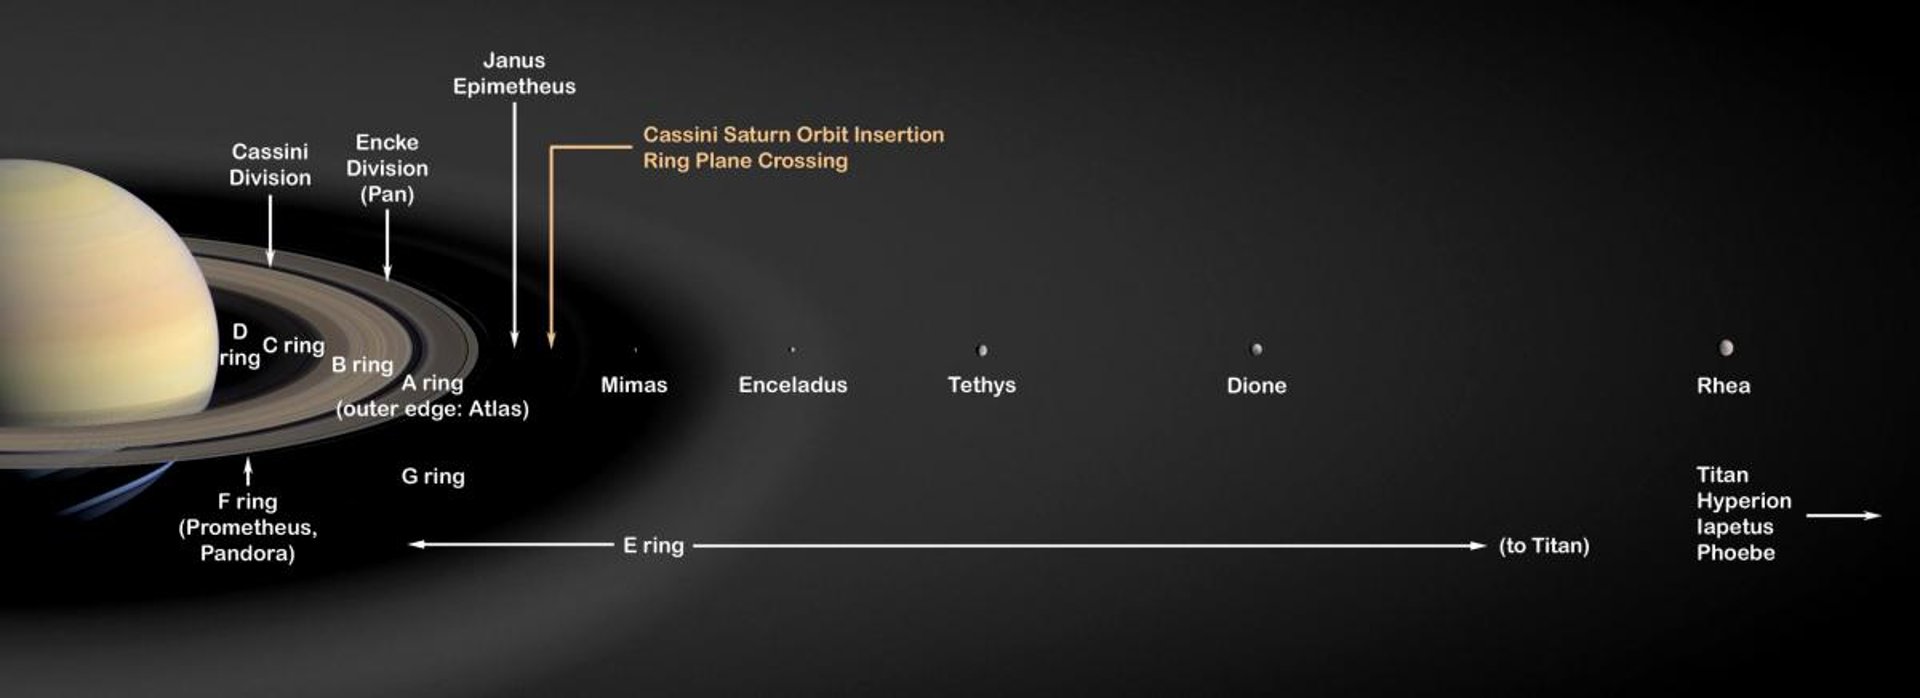 Saturn - Cassini Mission